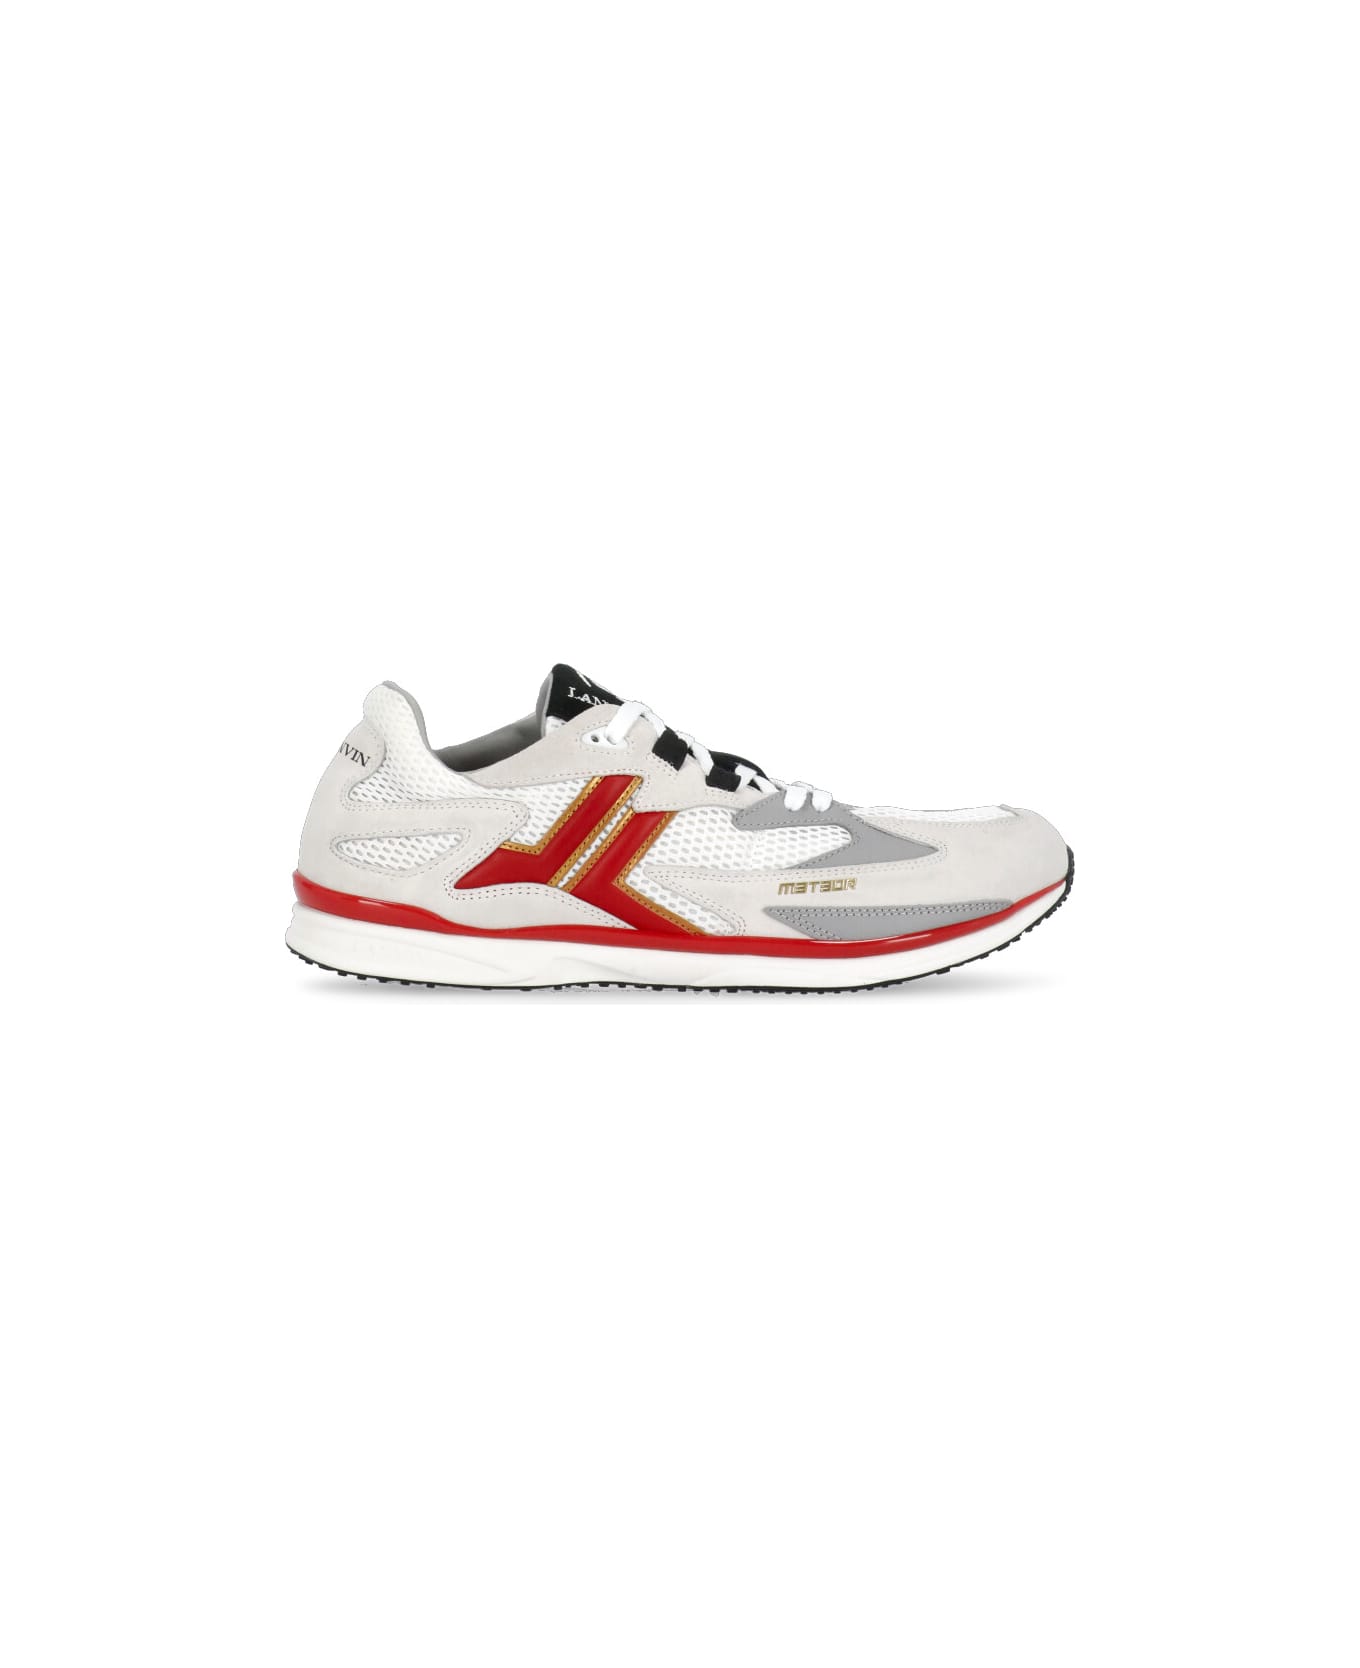 Lanvin Meteor Sneakers - White